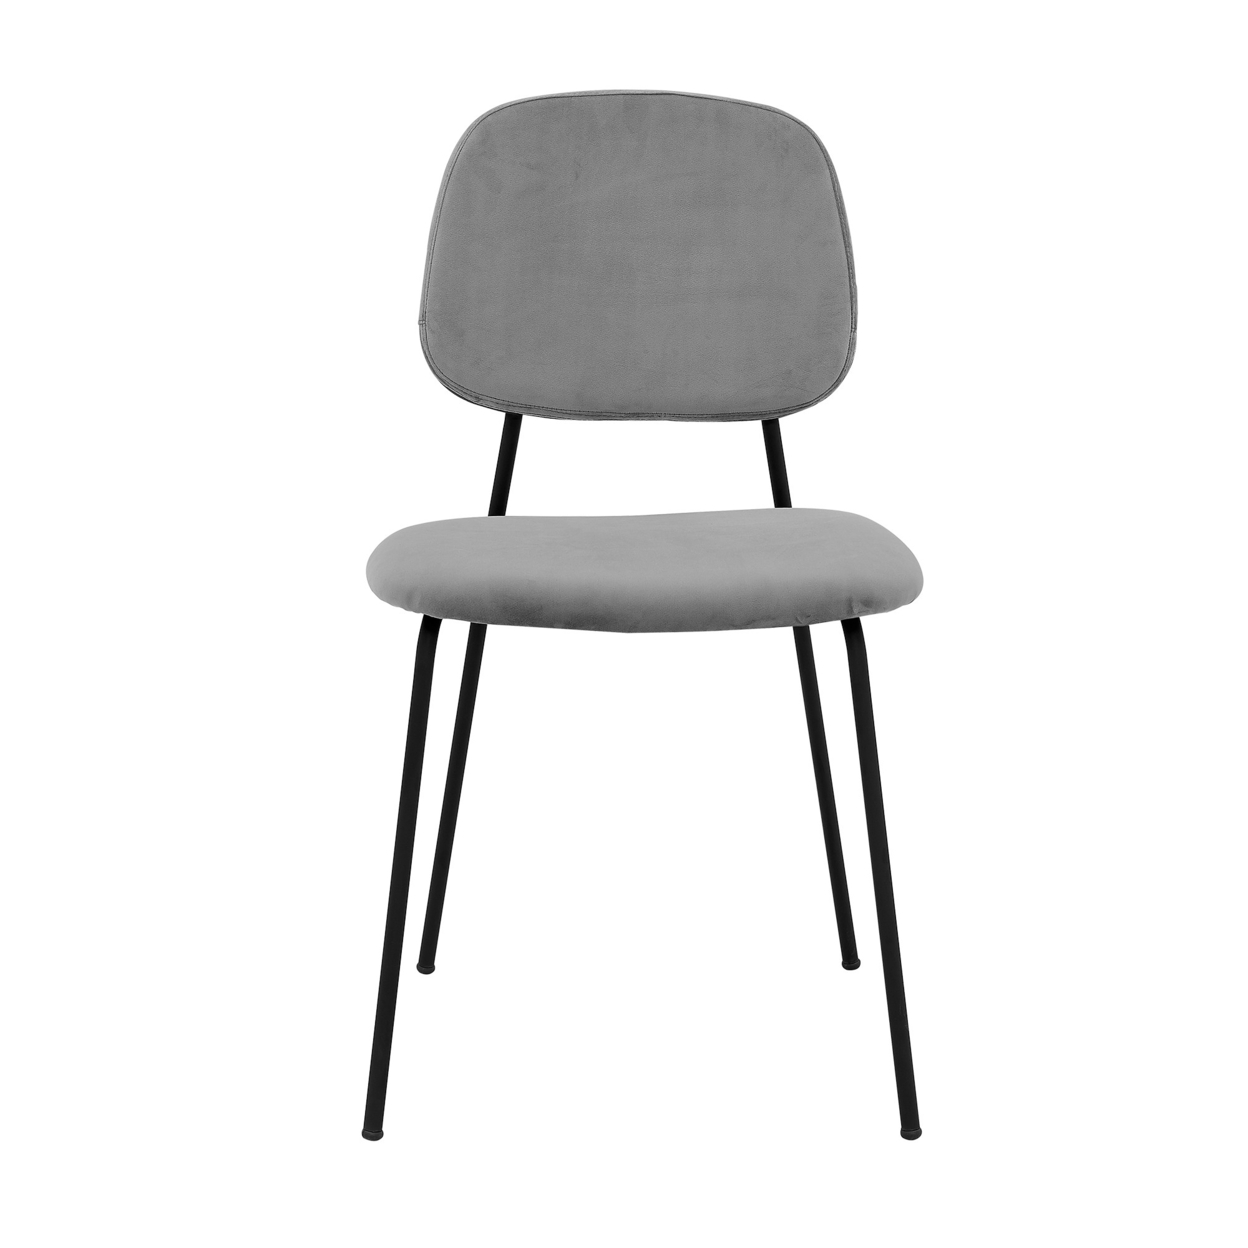 Metal Dining Chair With Velvet Upholstery, Set Of 2, Black And Gray- Saltoro Sherpi